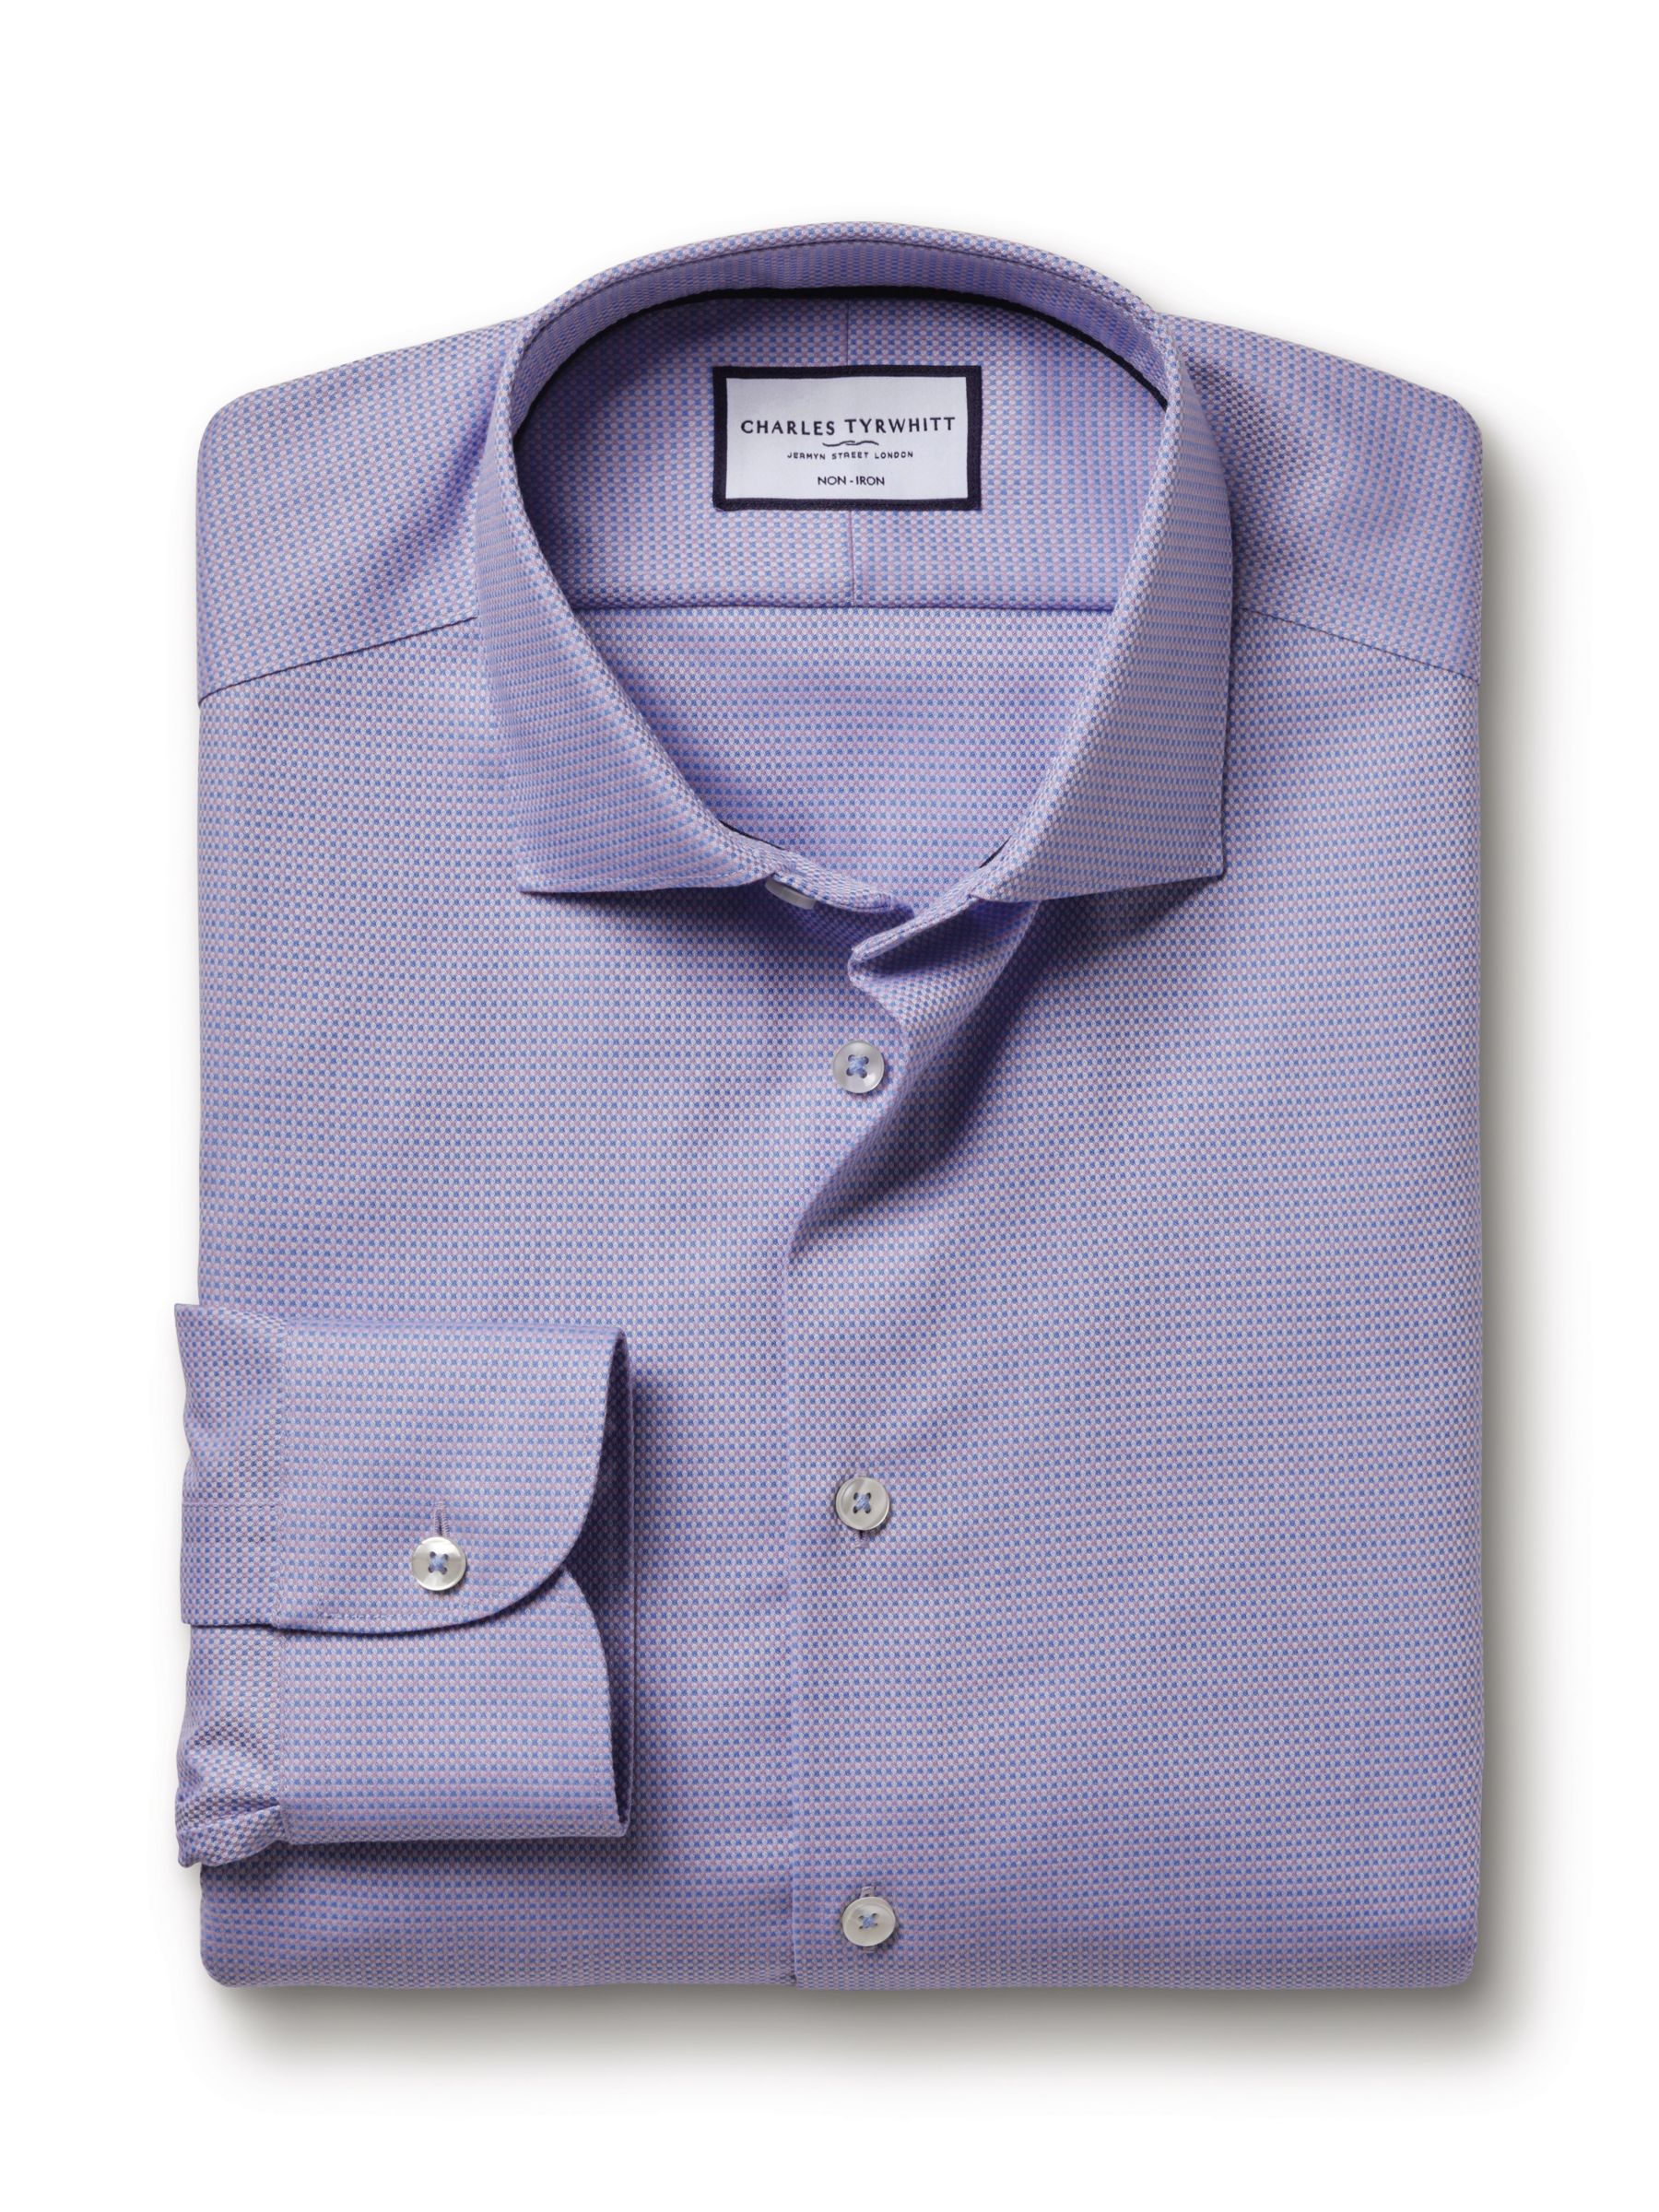 Charles Tyrwhitt Non-Iron Stretch Semi-Plain Shirt, Lilac, 17.5 36